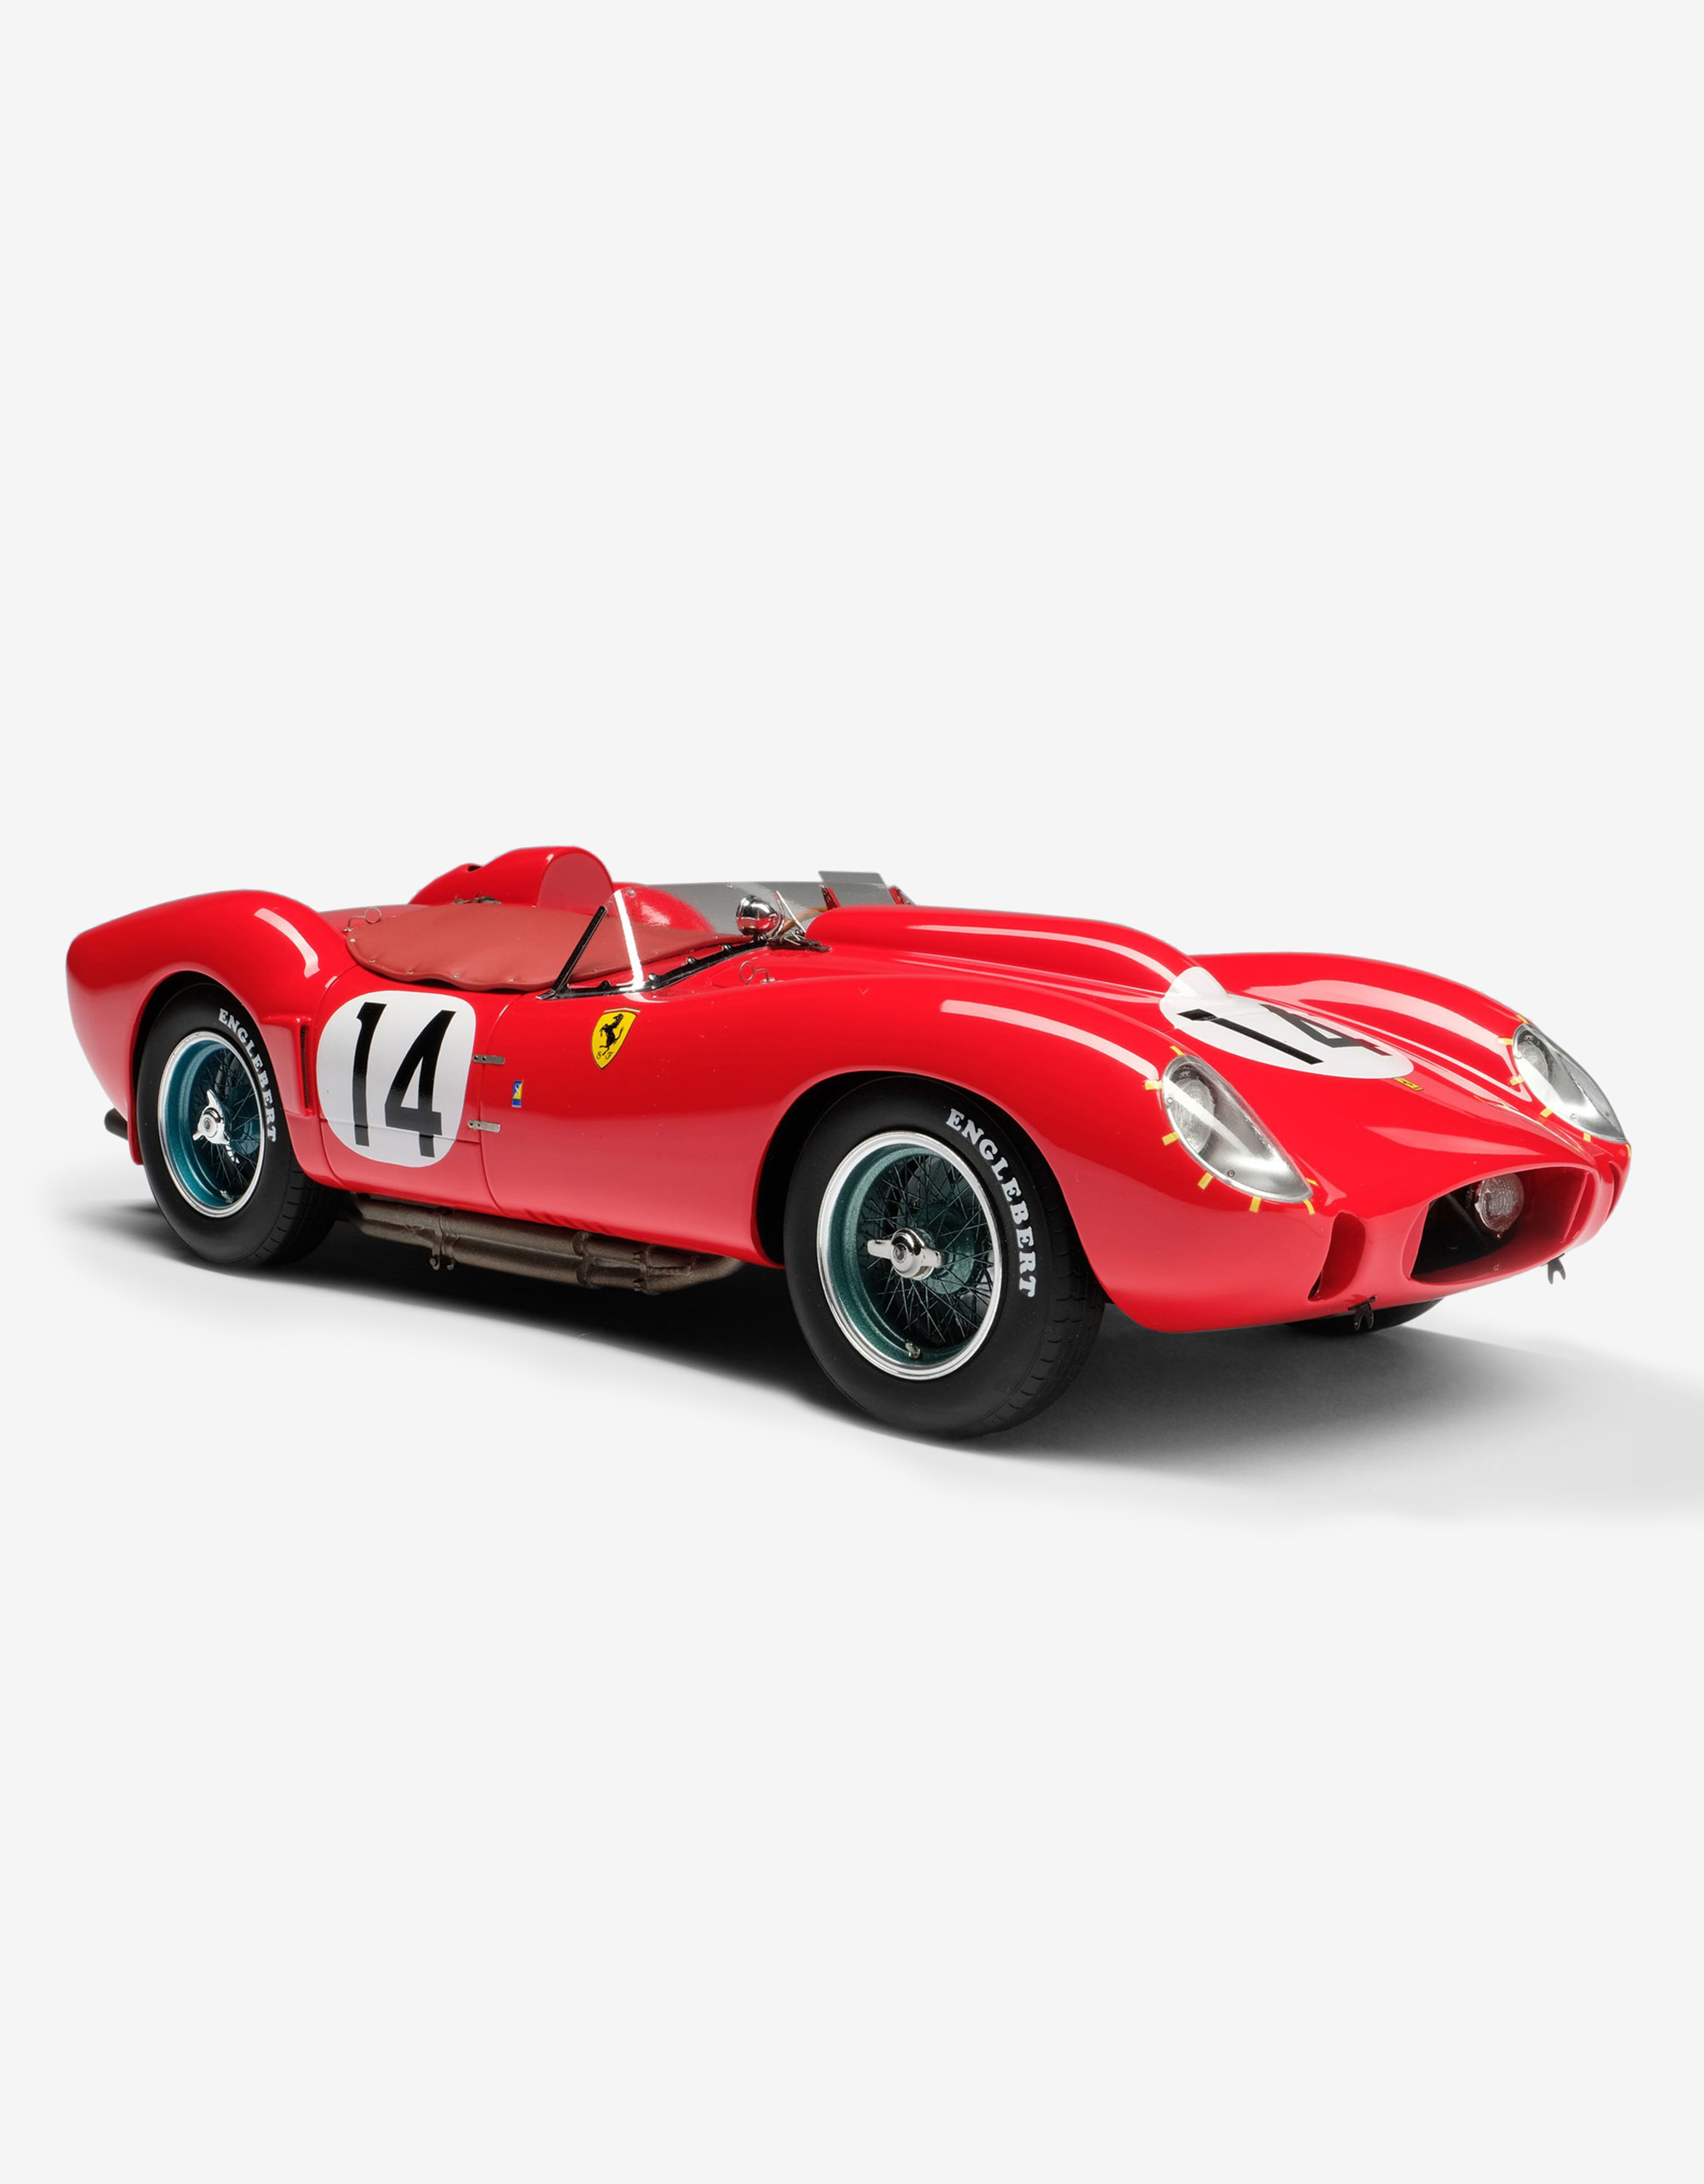 Ferrari Ferrari 250 TR 1958 Le Mans model in 1:18 scale Red L7580f